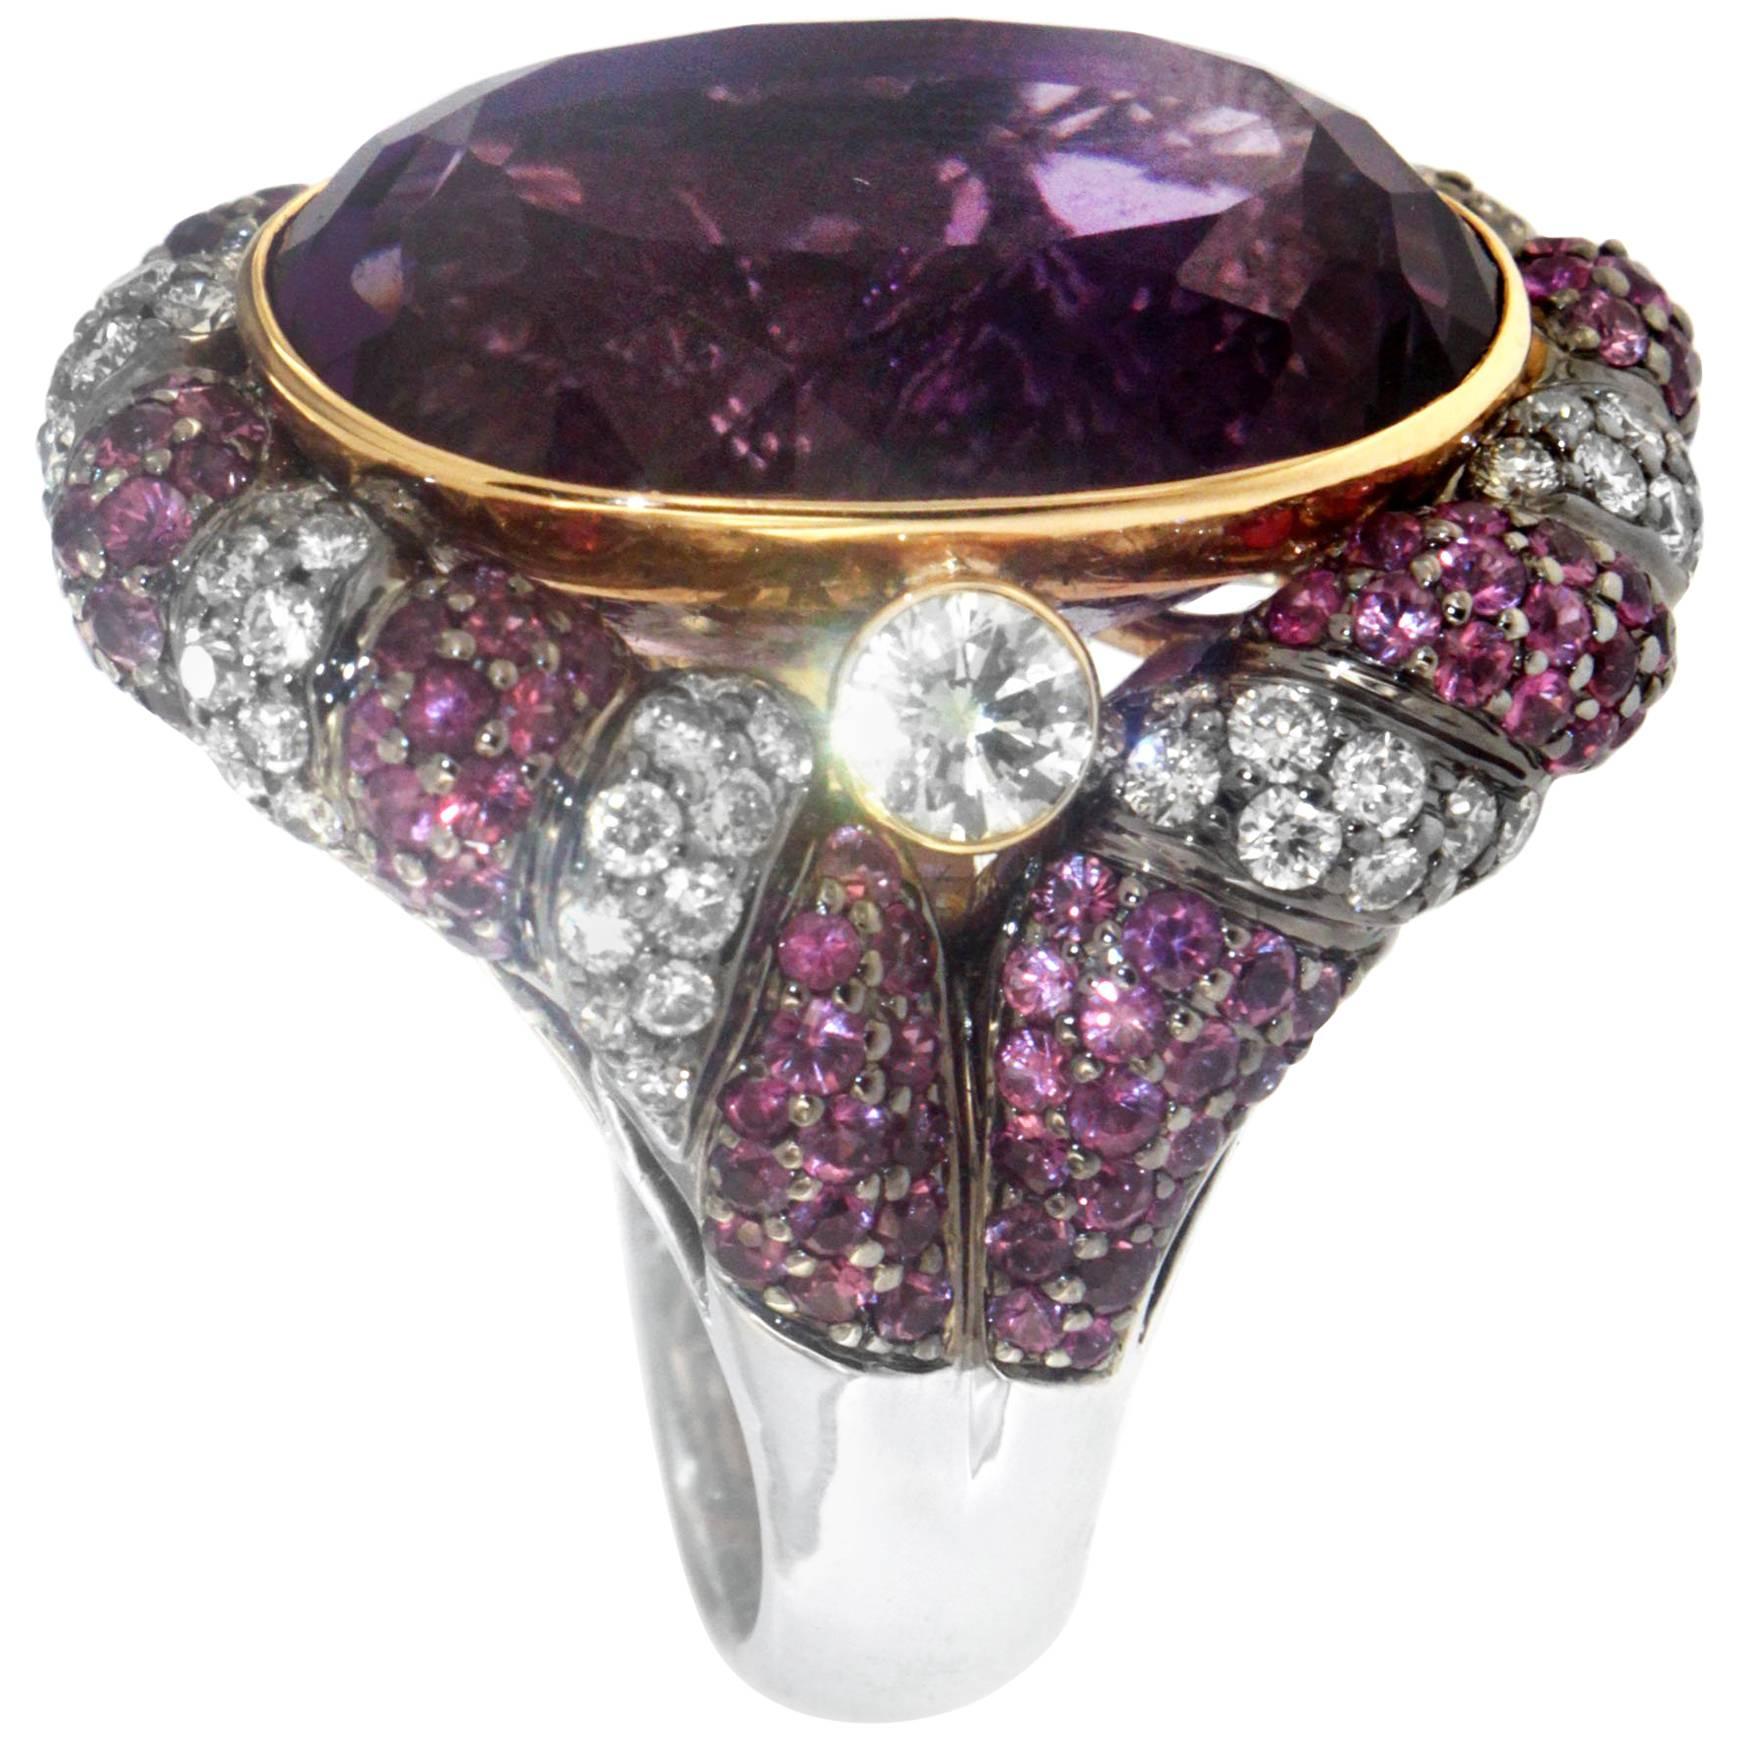 Zorab Creation 19.89 Carat Amethyst Pink Sapphire Diamond Cocktail Ring